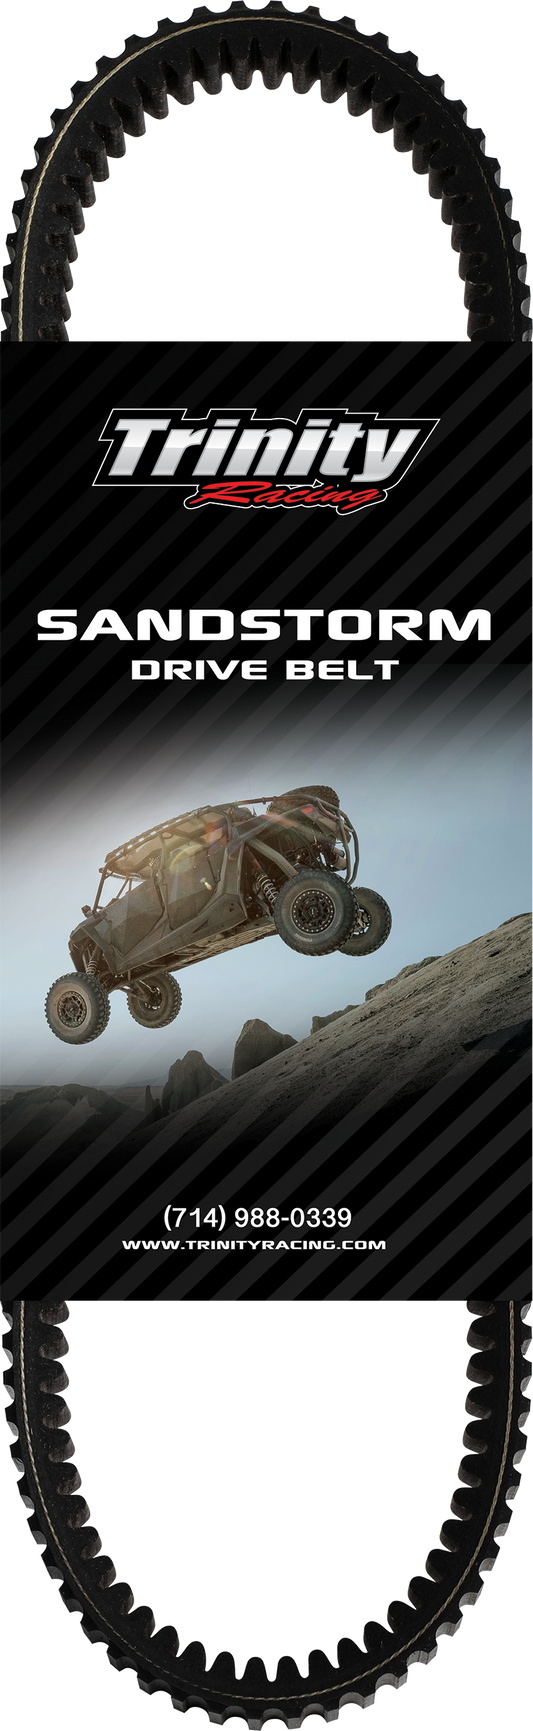 Trinity racing sandstorm drive belt - rzr xp 1000